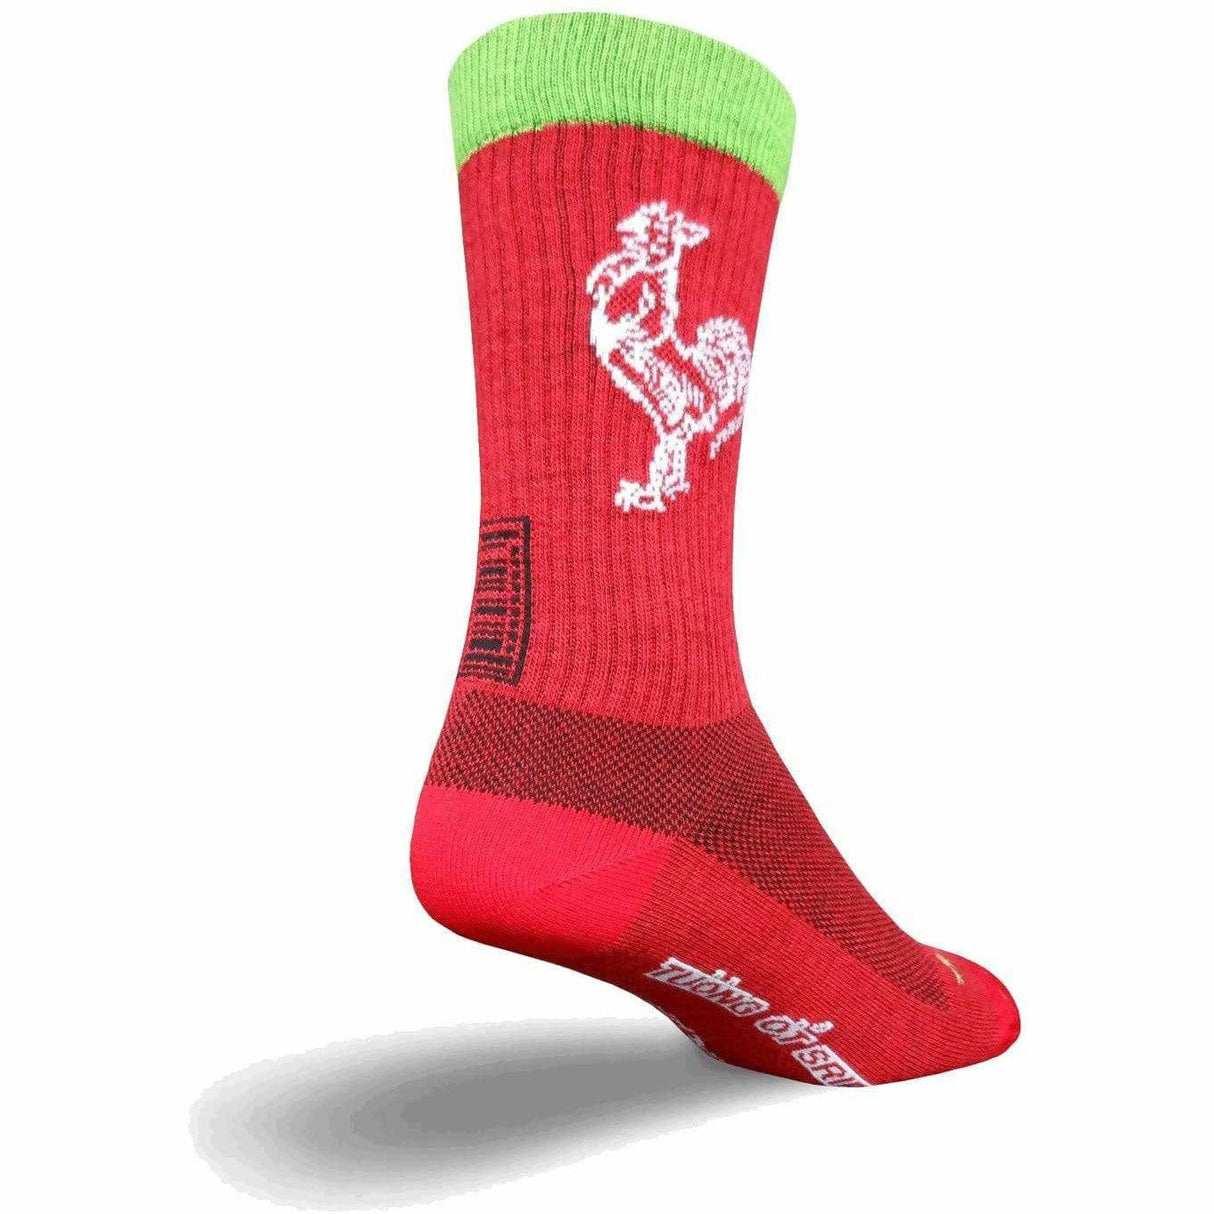 SockGuy Sriracha Performance Crew Socks  -  Small/Medium